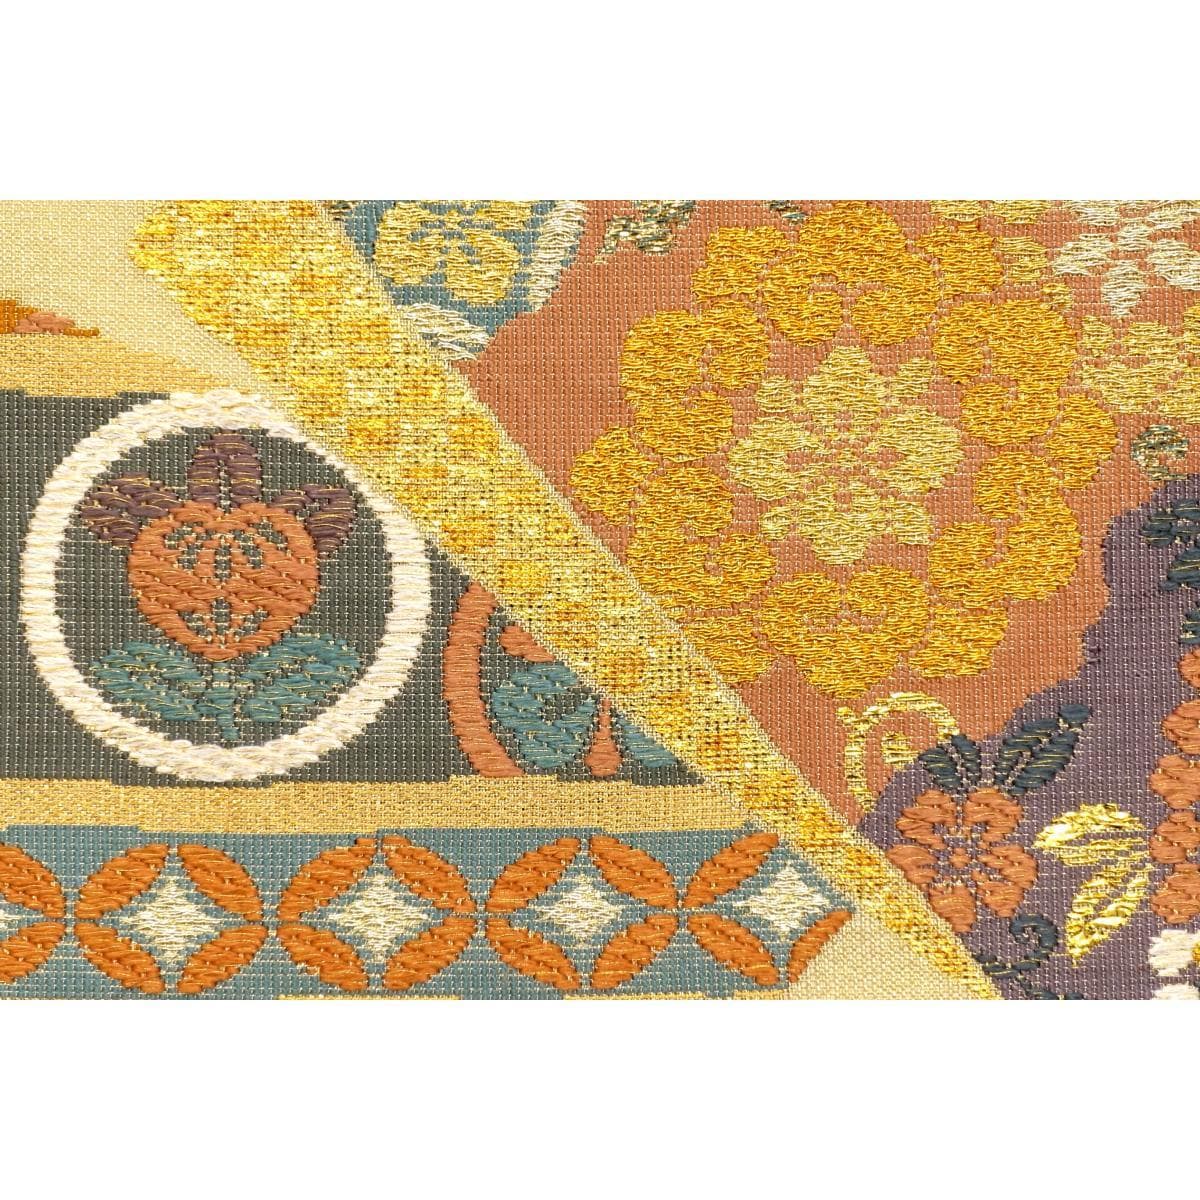 [Unused items] Fukuro obi Fujibayashi Textile